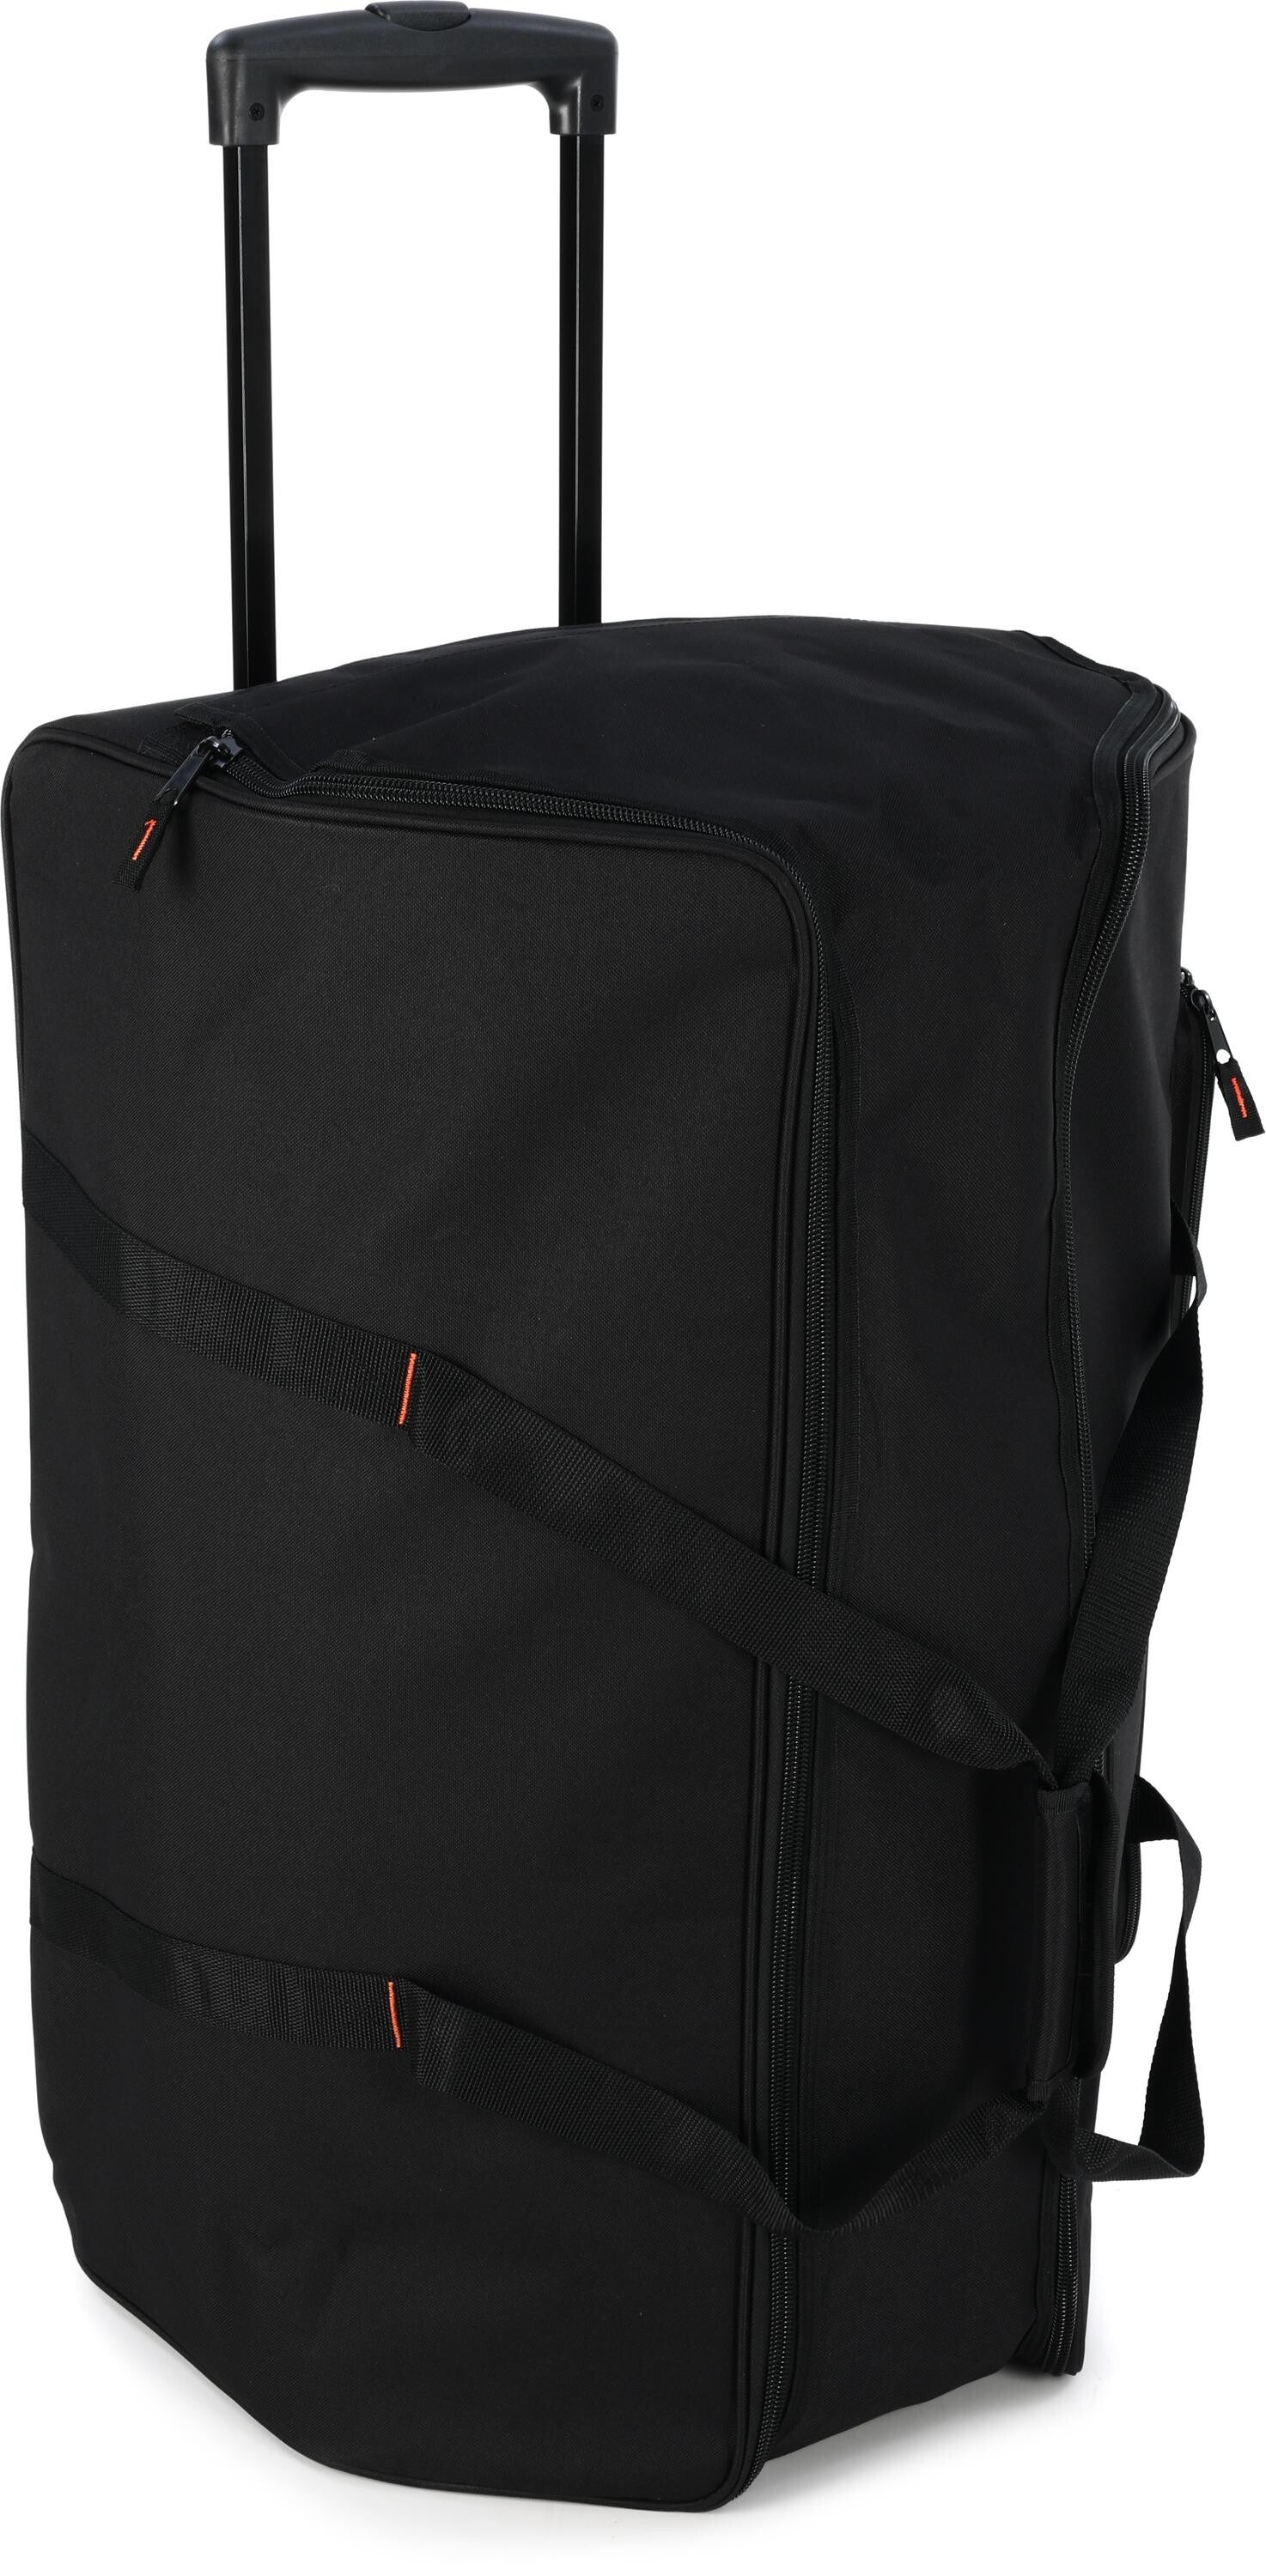 Bundled Item: JBL Bags EON715-BAG-W Wheeled Tote Bag for EON715 Speaker